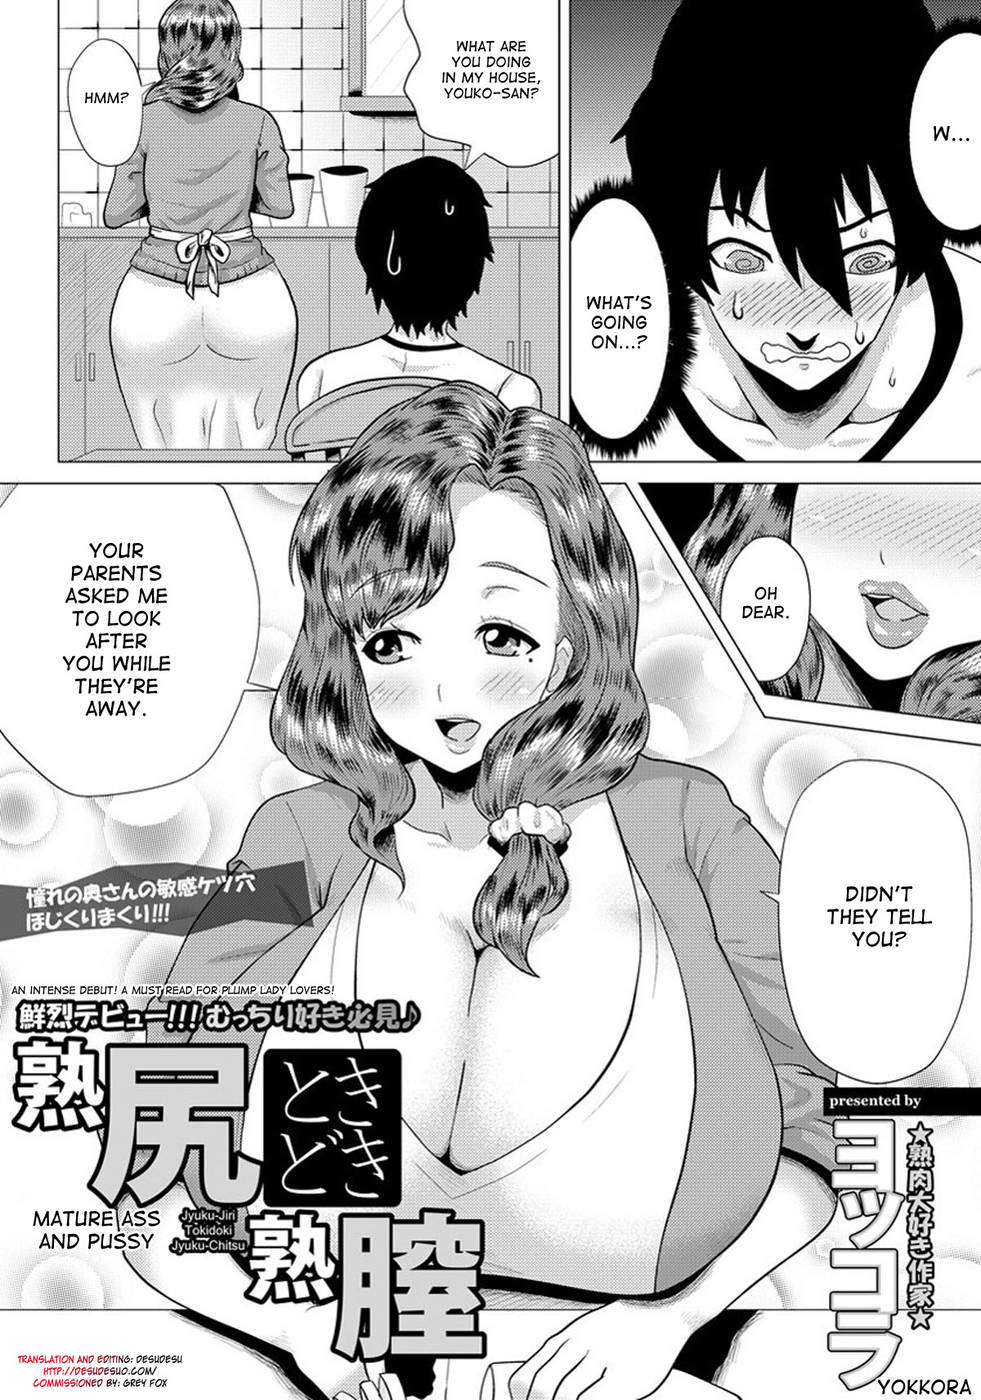 Hentai Manga Comic-Mature Ass and Pussy-Read-1